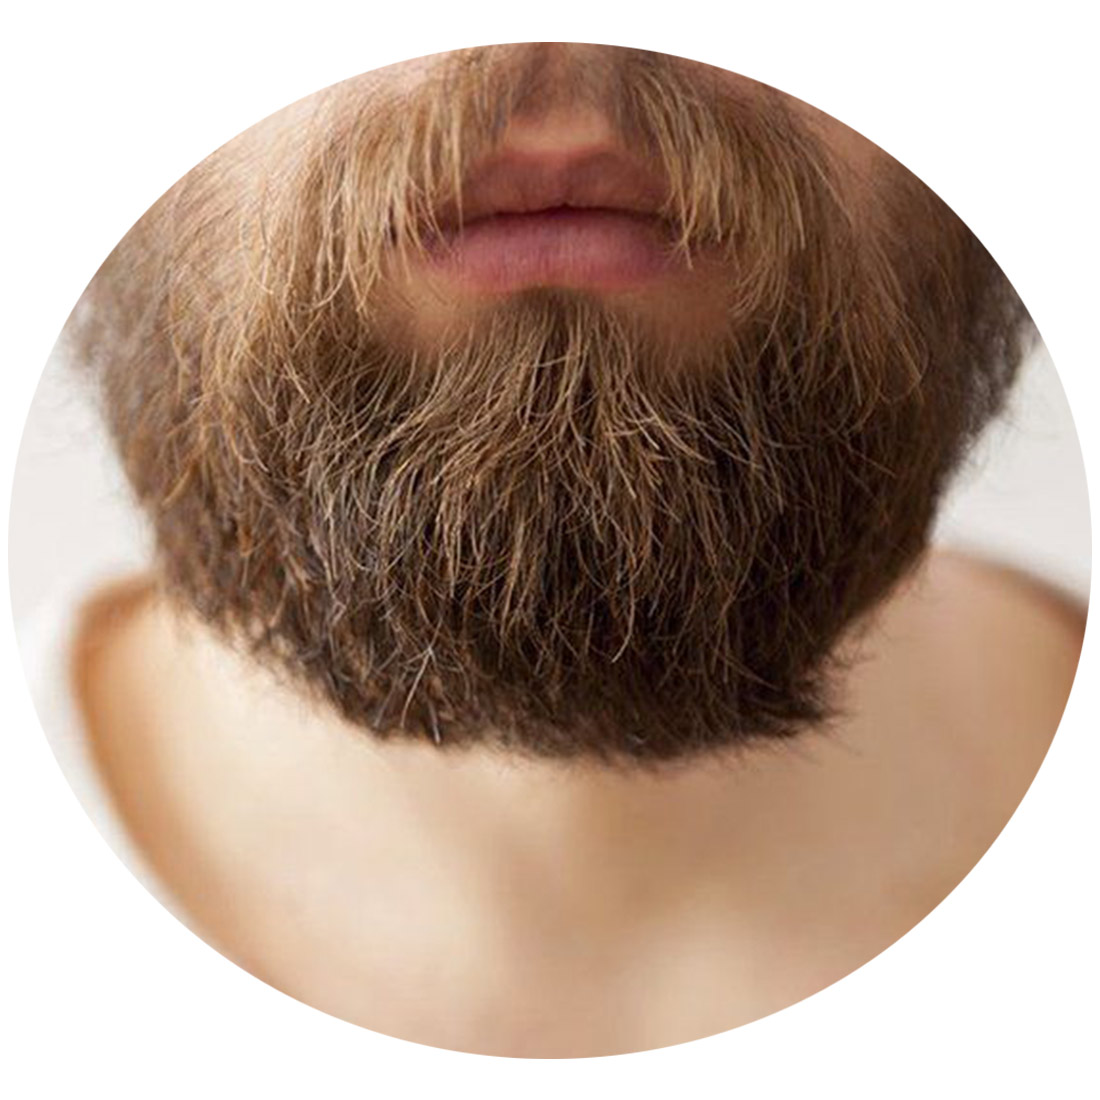 Beard-implantation-14